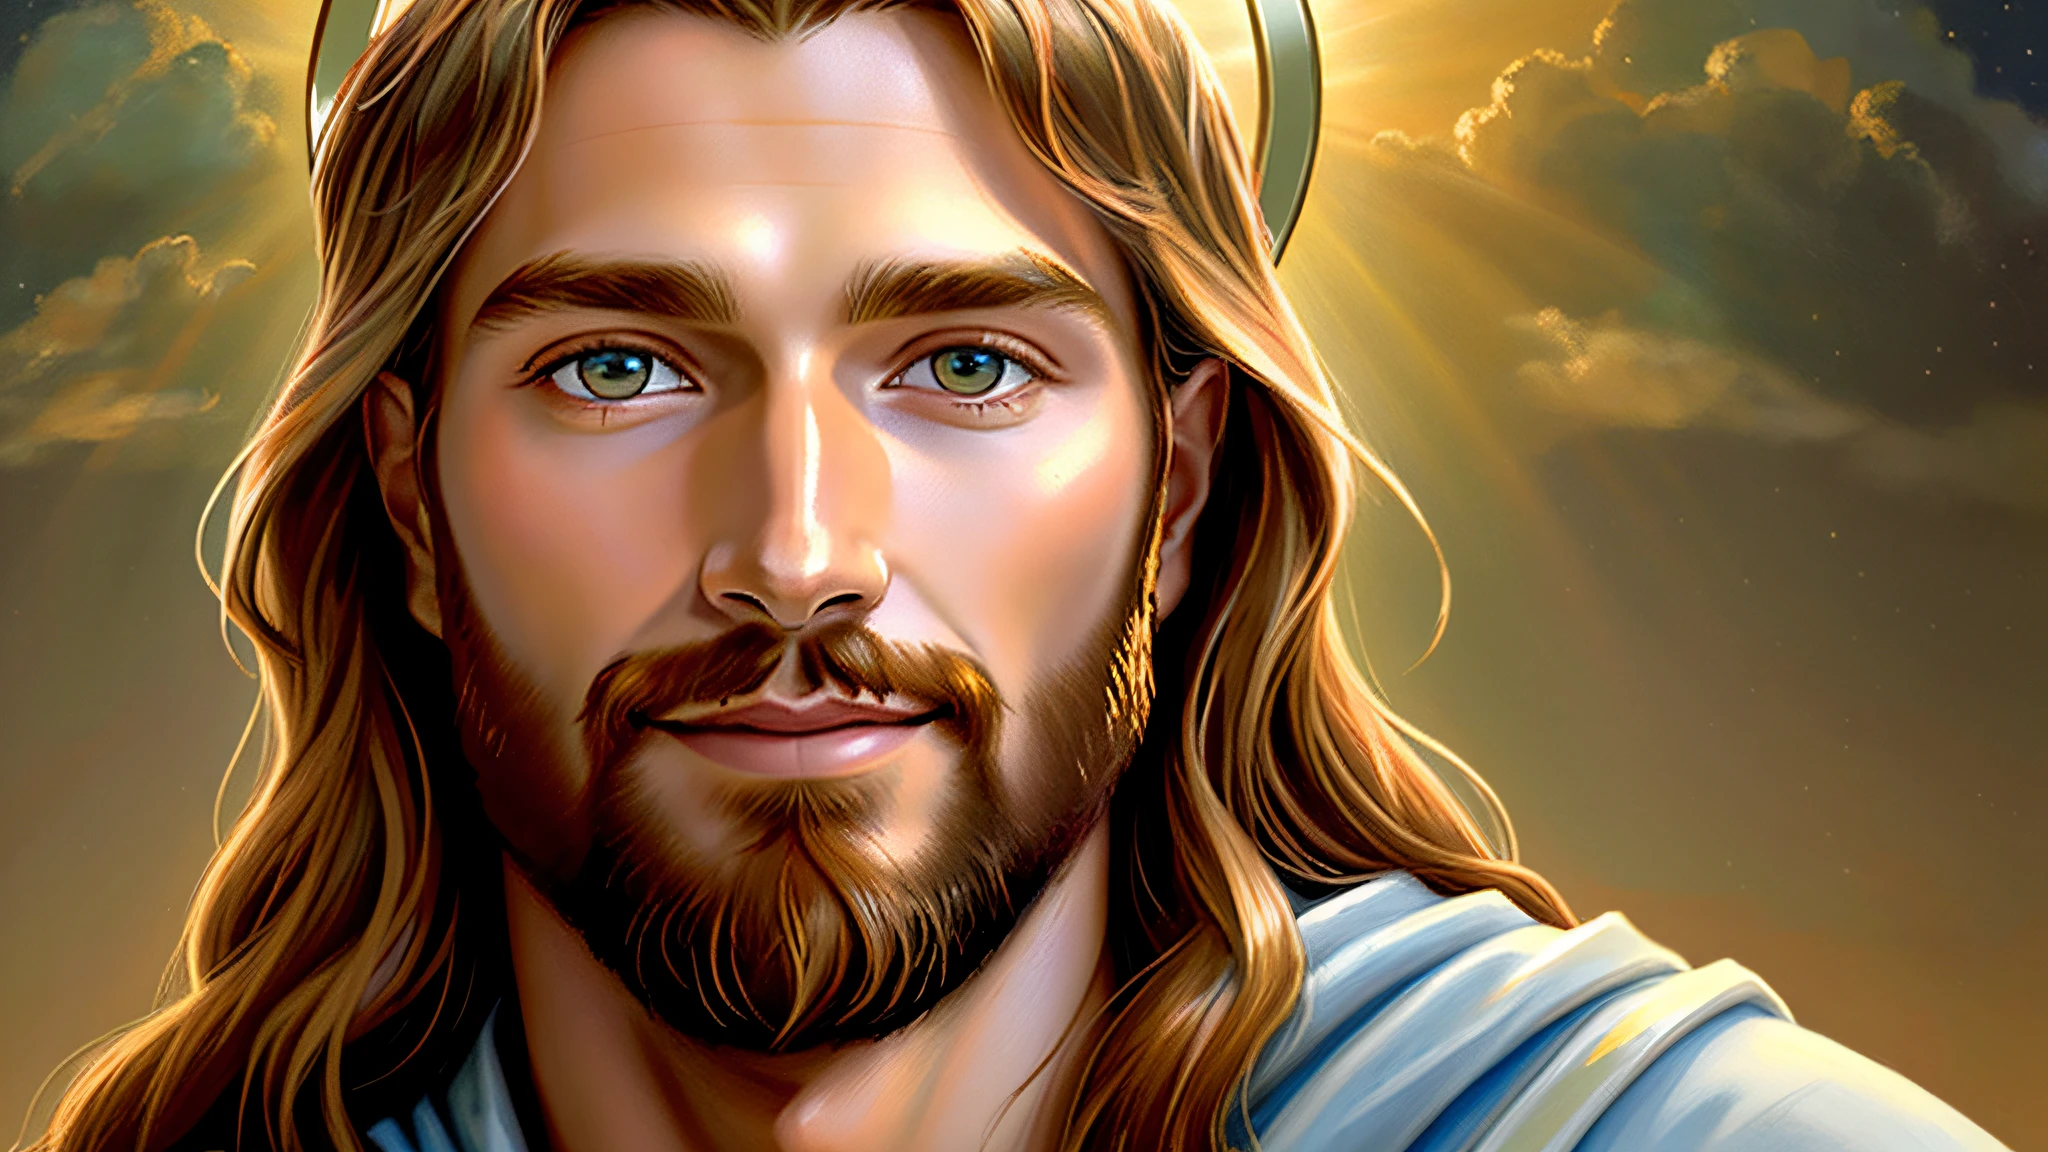 A painting of 耶穌 with a halo in heaven, 耶穌 Christ, 在天堂微笑, Portrait of 耶穌 Christ, Face of 耶穌, 年輕的全能神, 天上神的肖像, 格雷格·奧爾森, 耶穌 Gigachad, 耶穌 of Nazareth, 耶穌, 神的臉, 上帝看著我